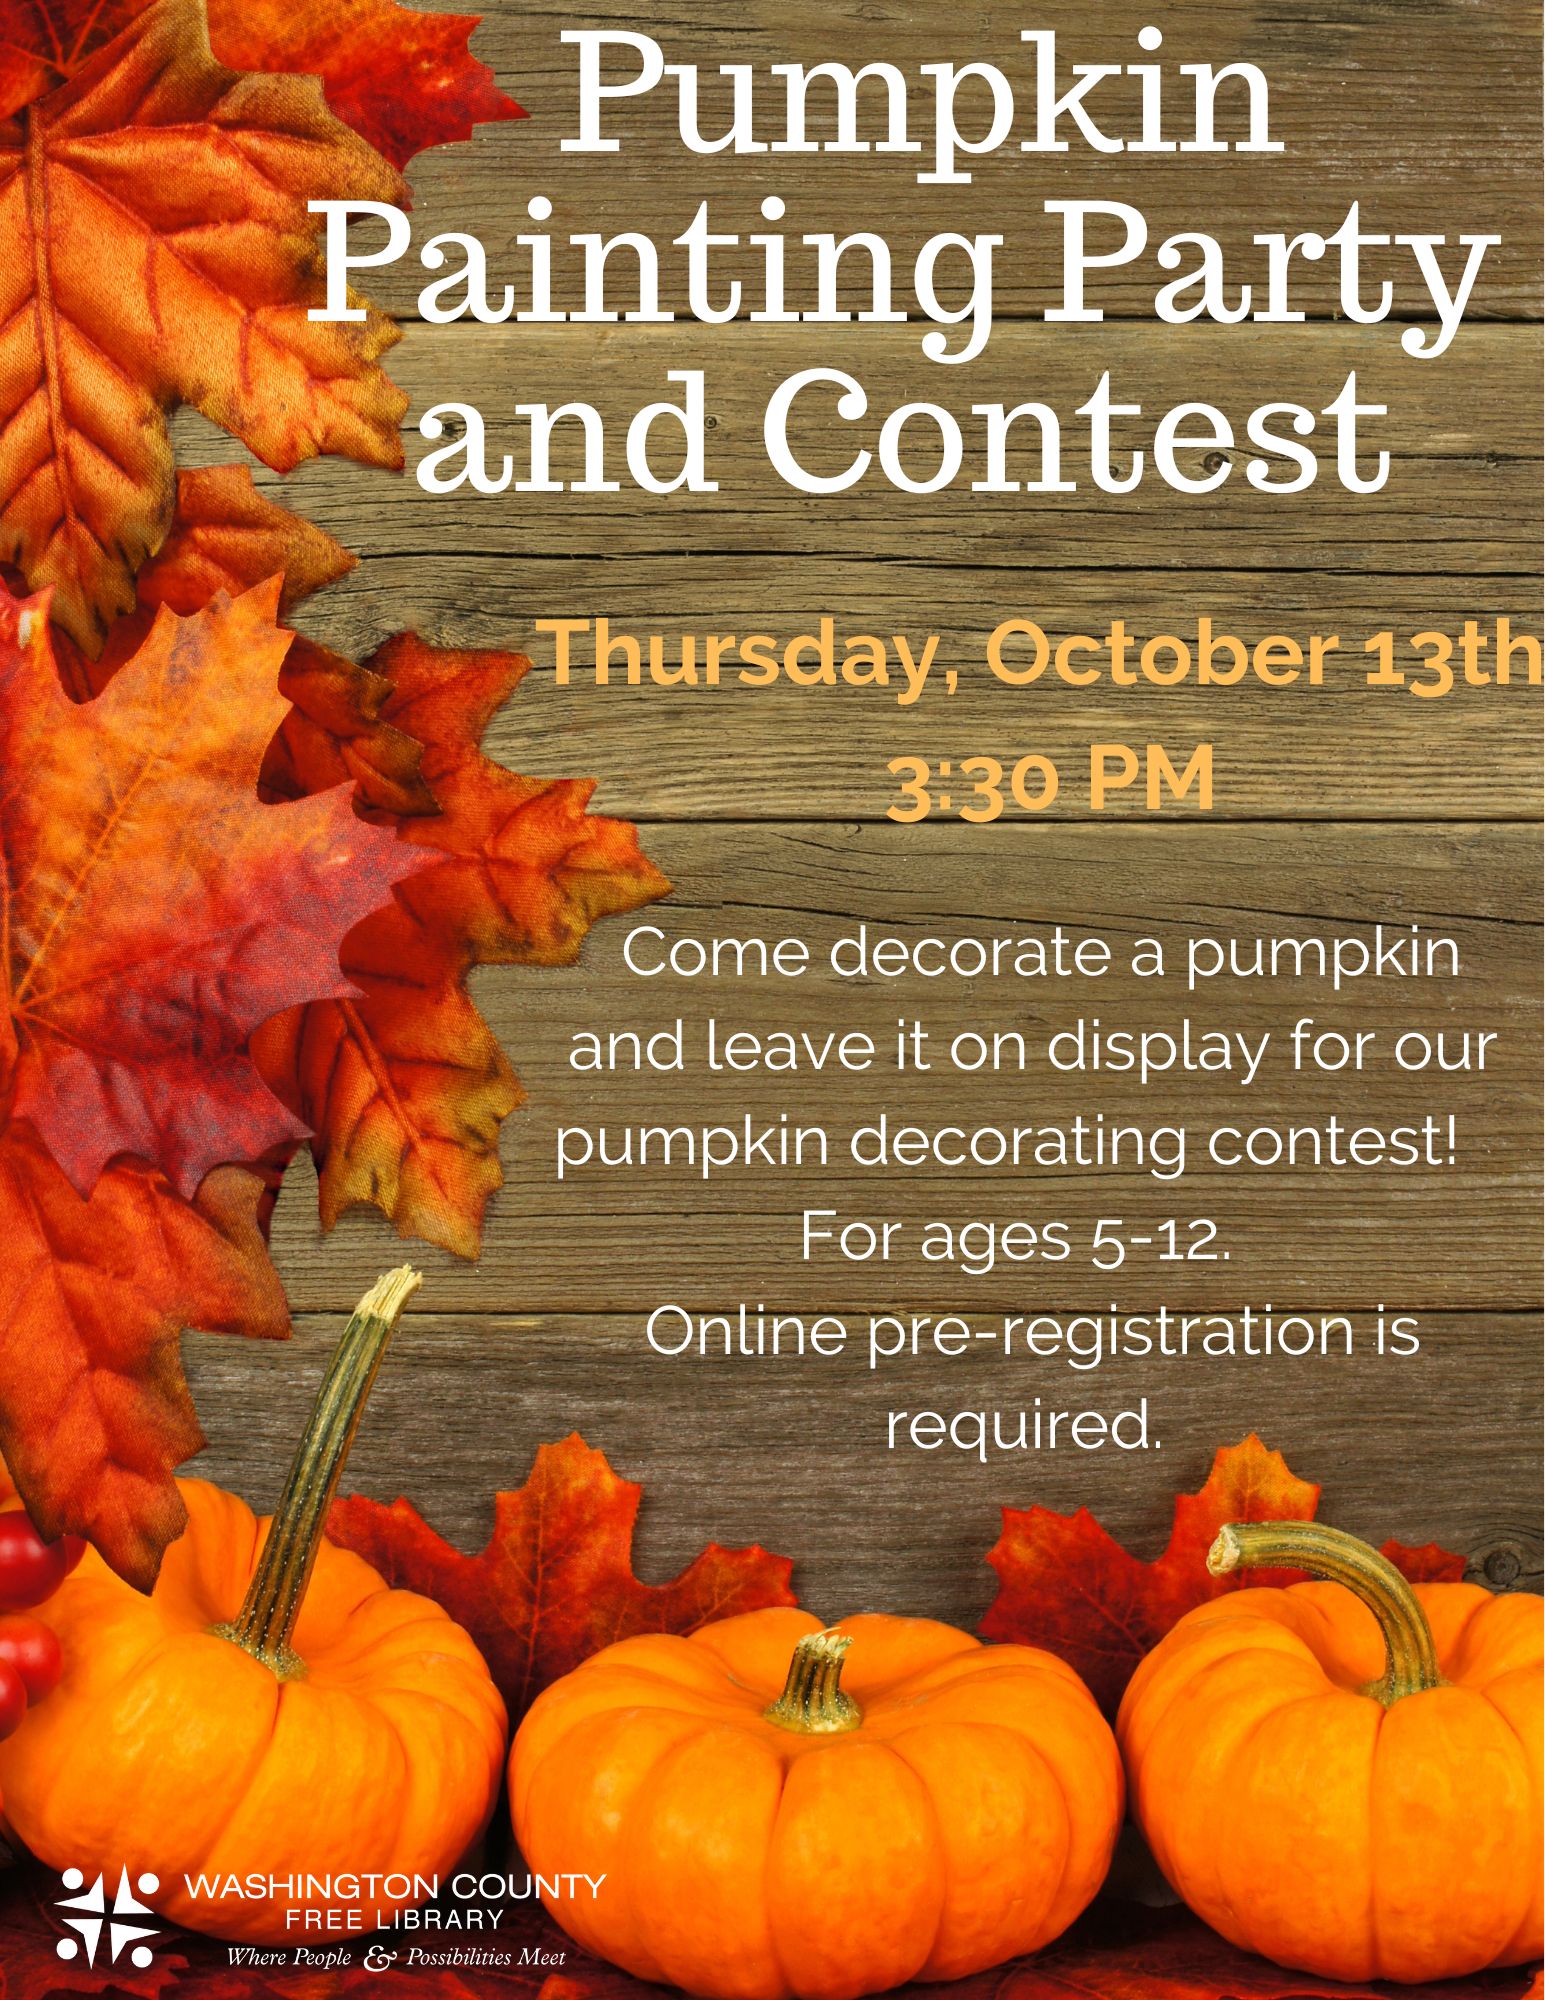 pumpkin painting party details